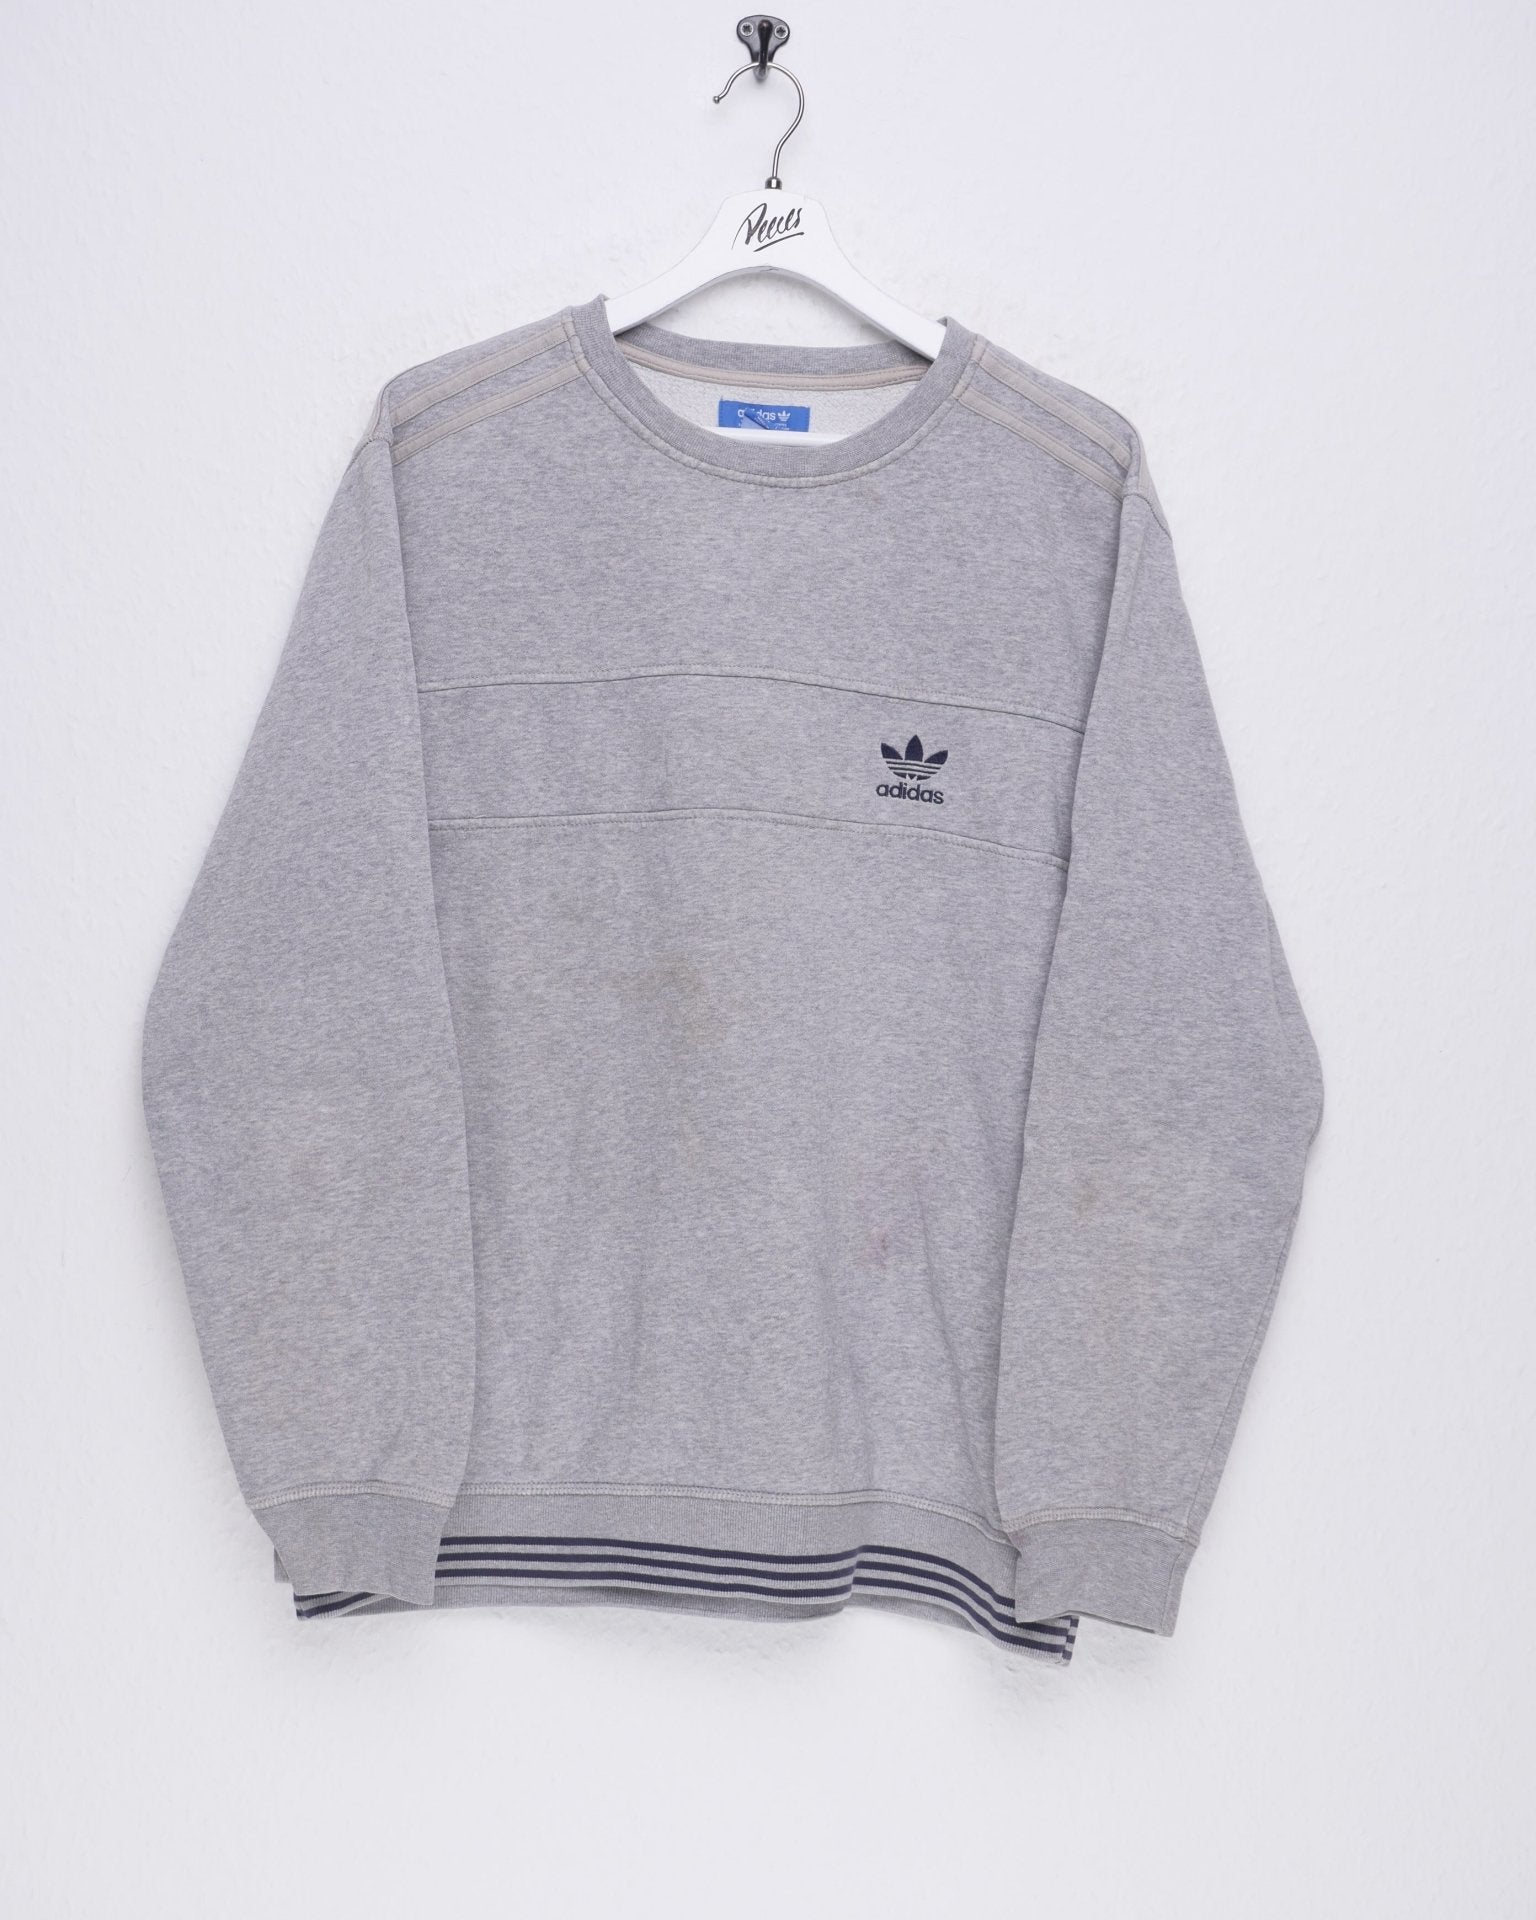 Adidas embroidered Logo Vintage Sweater - Peeces